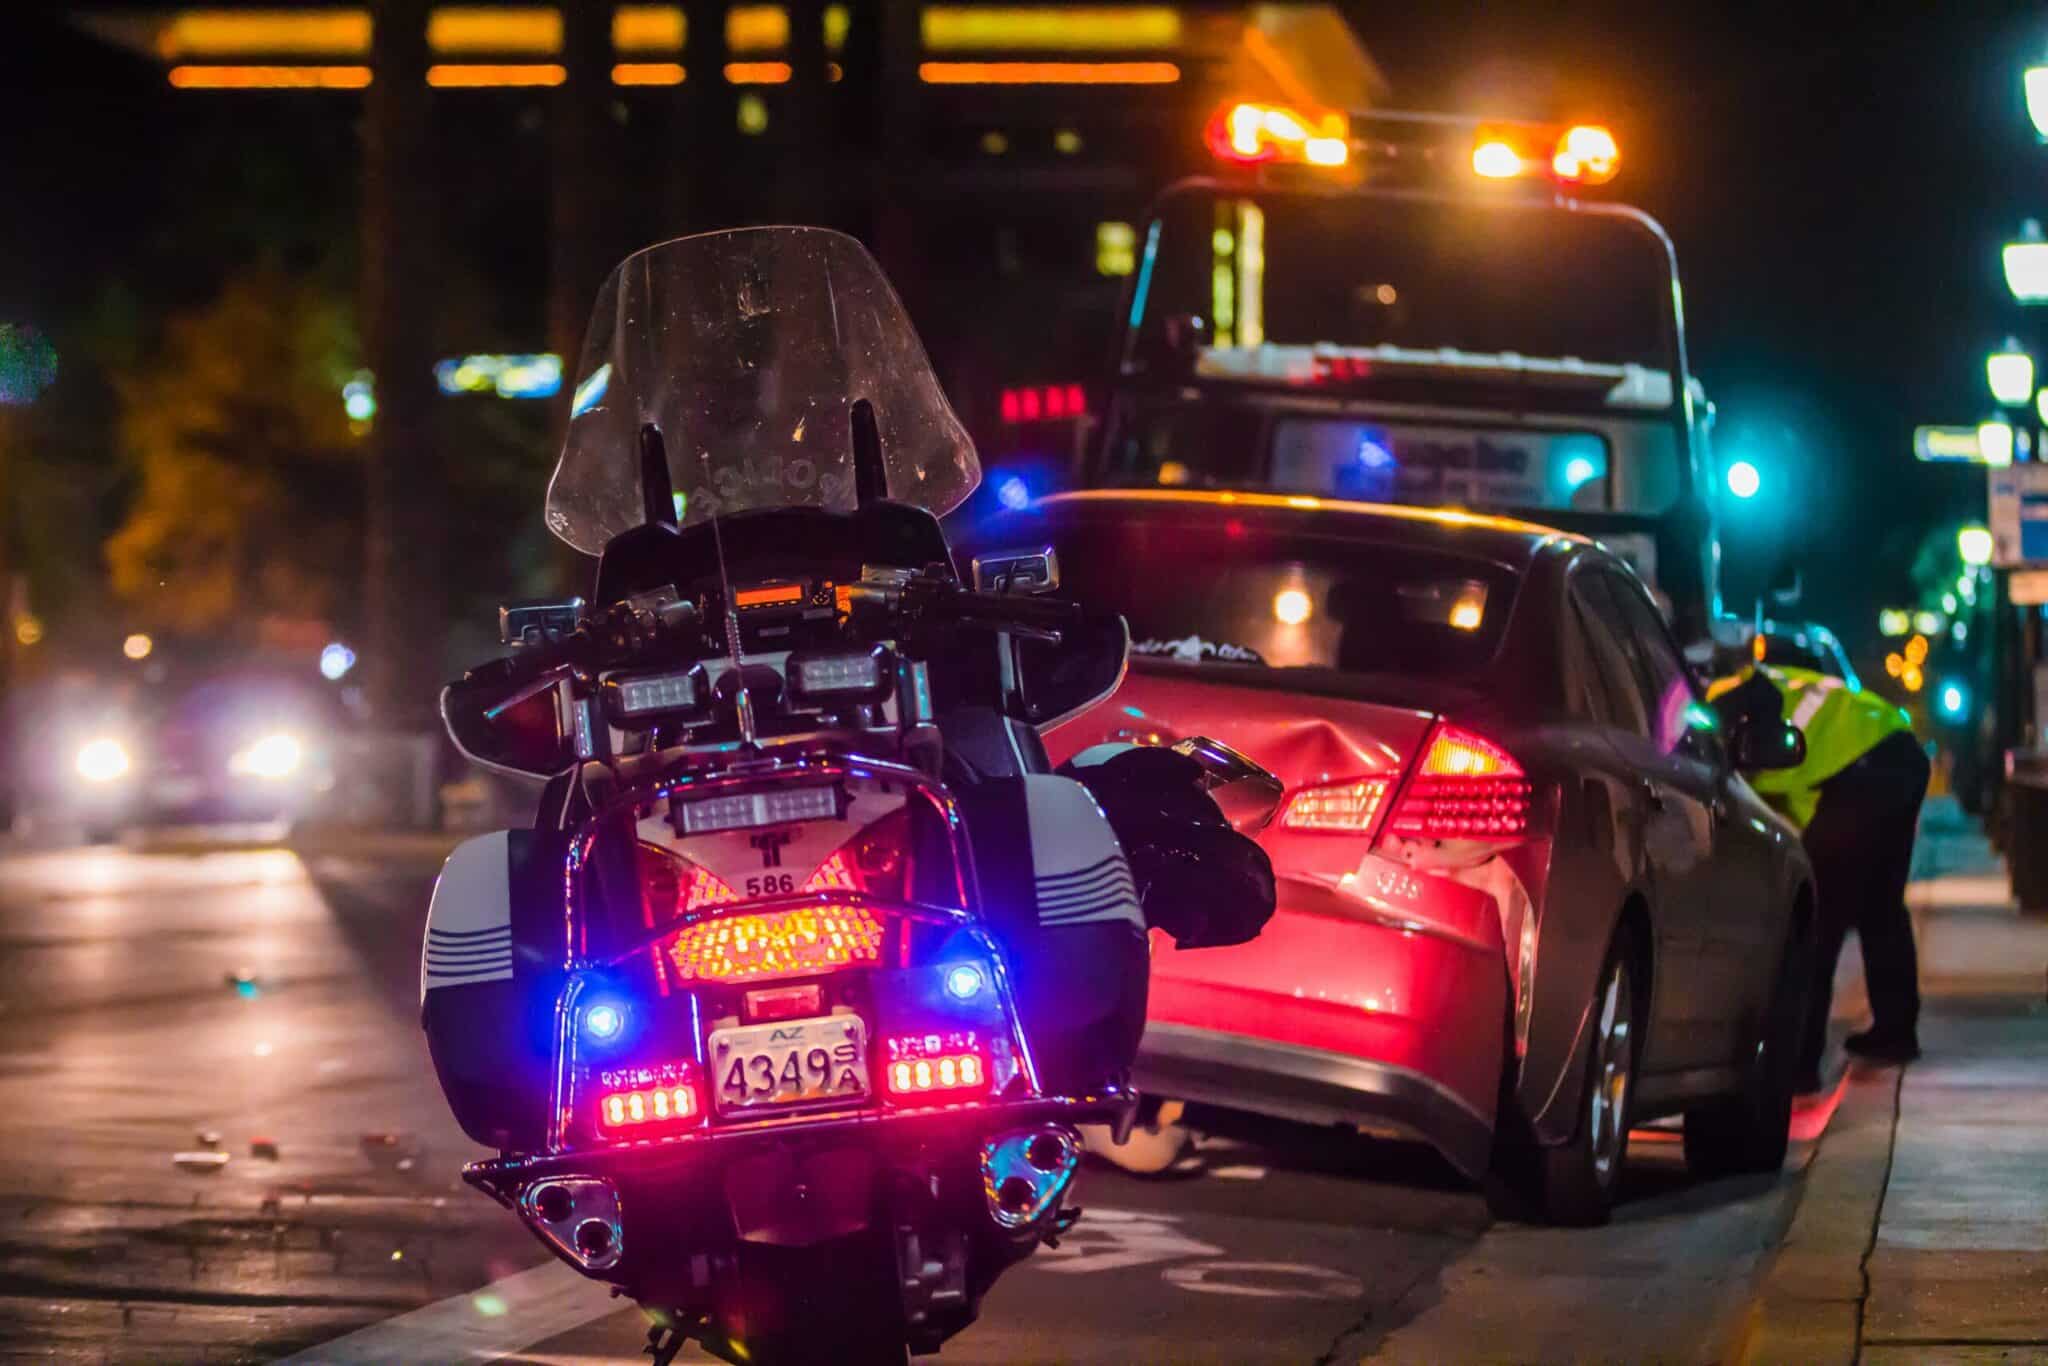 valet car gets in accident - law enforcement